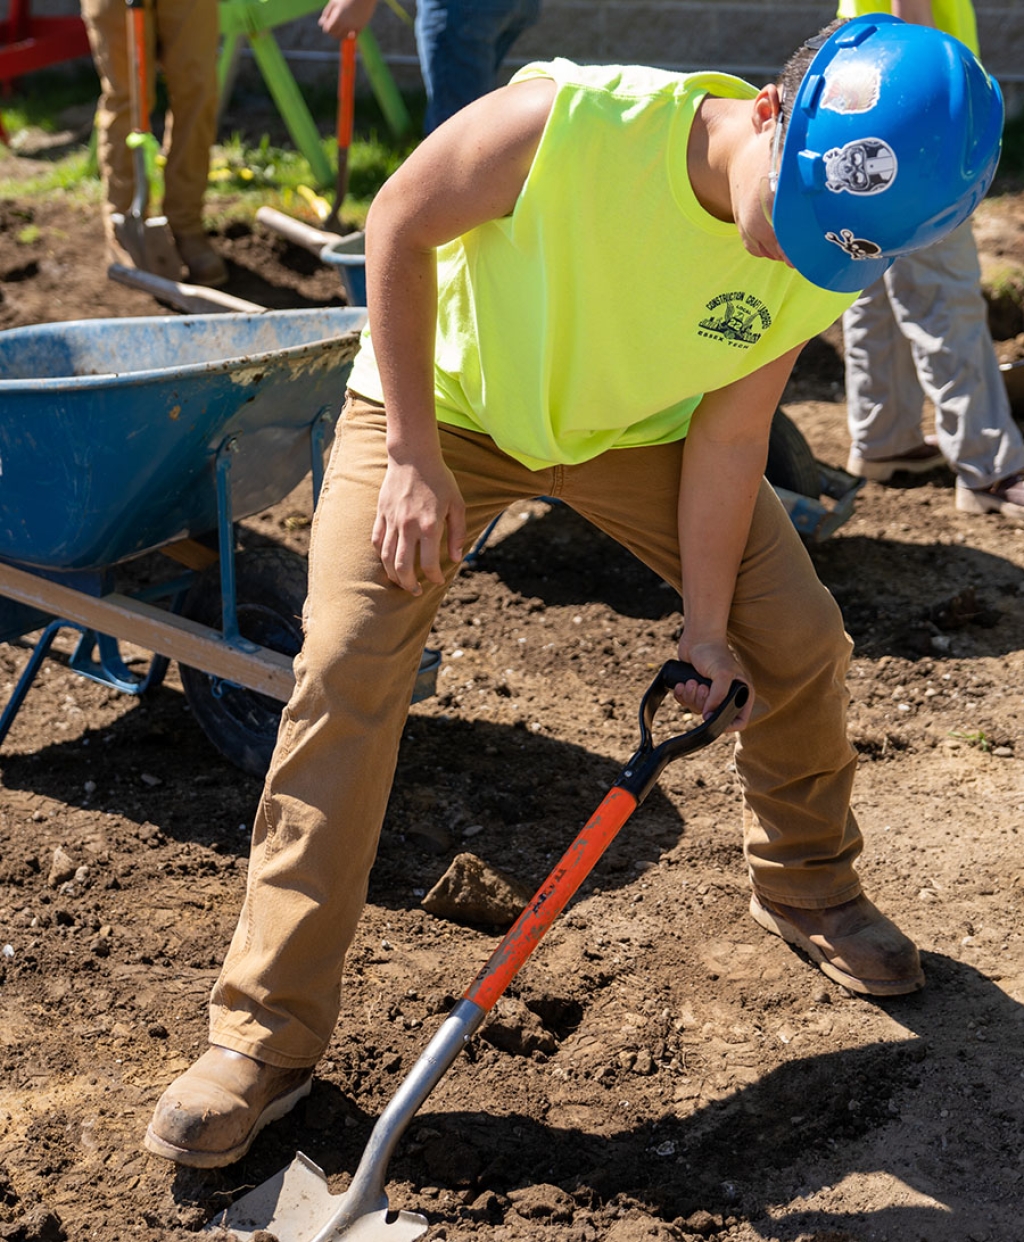 A student shovels dirt at a construction site.